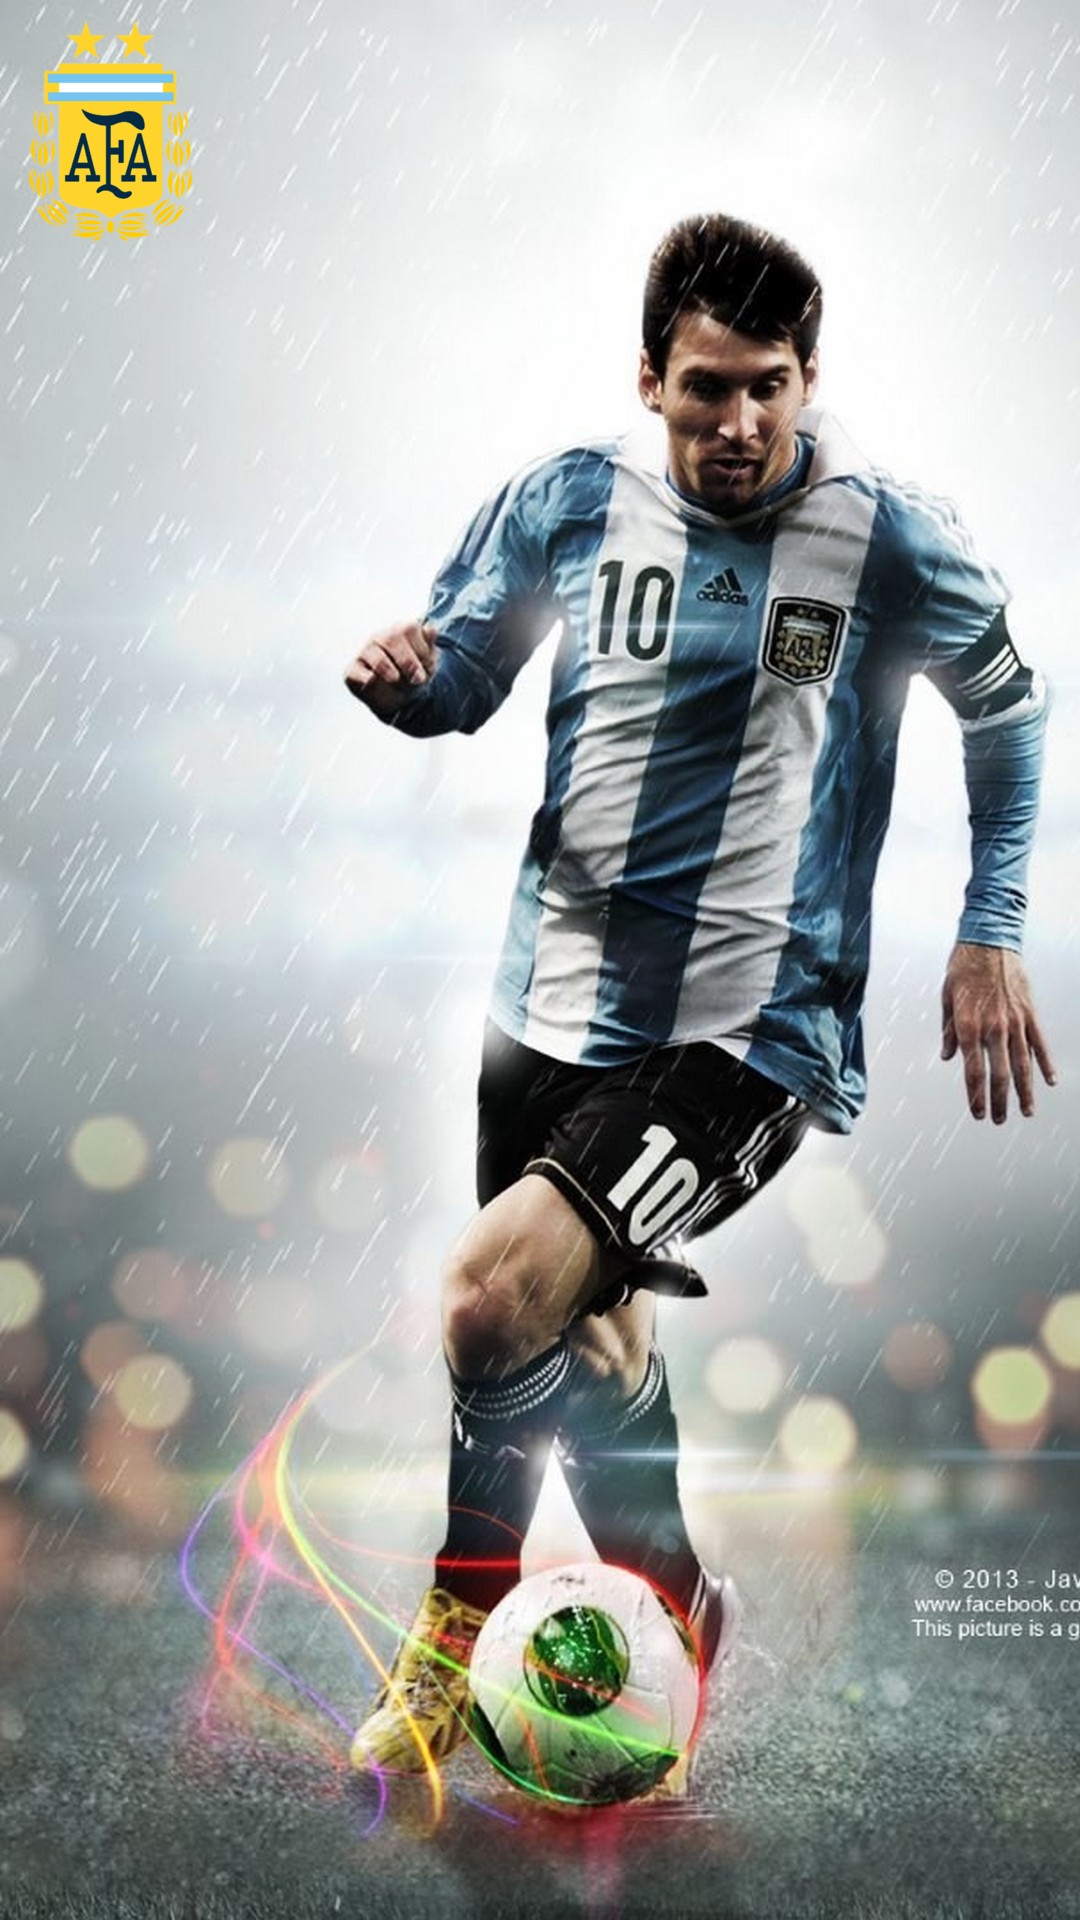 messi wallpaper android,football player,football,soccer player,soccer ball,ball